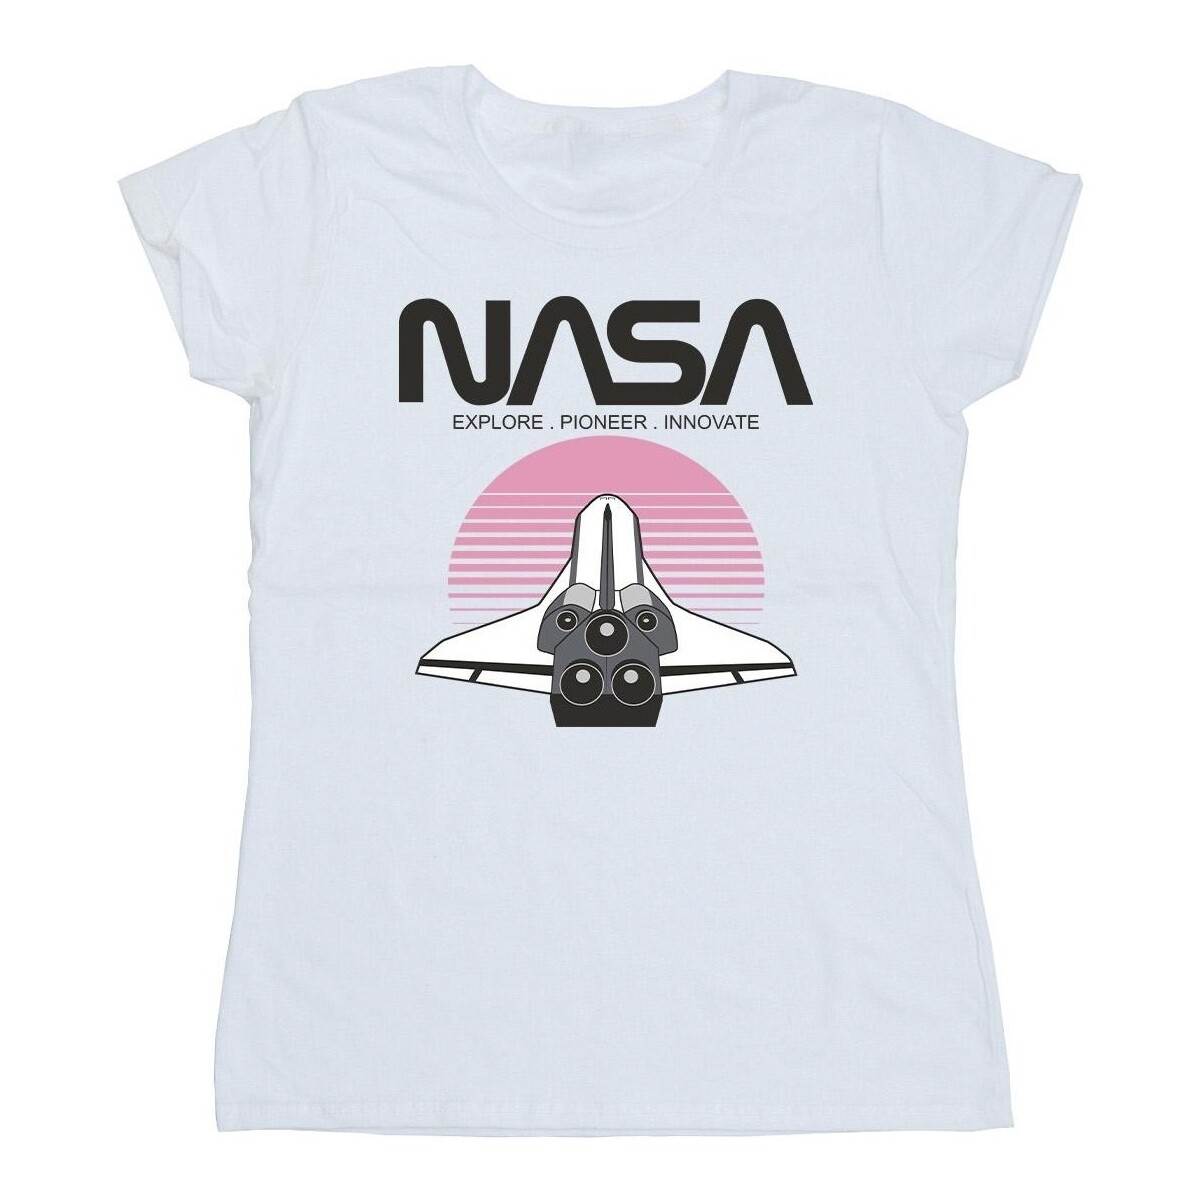 Vêtements Femme T-shirts manches longues Nasa Space Shuttle Sunset Blanc